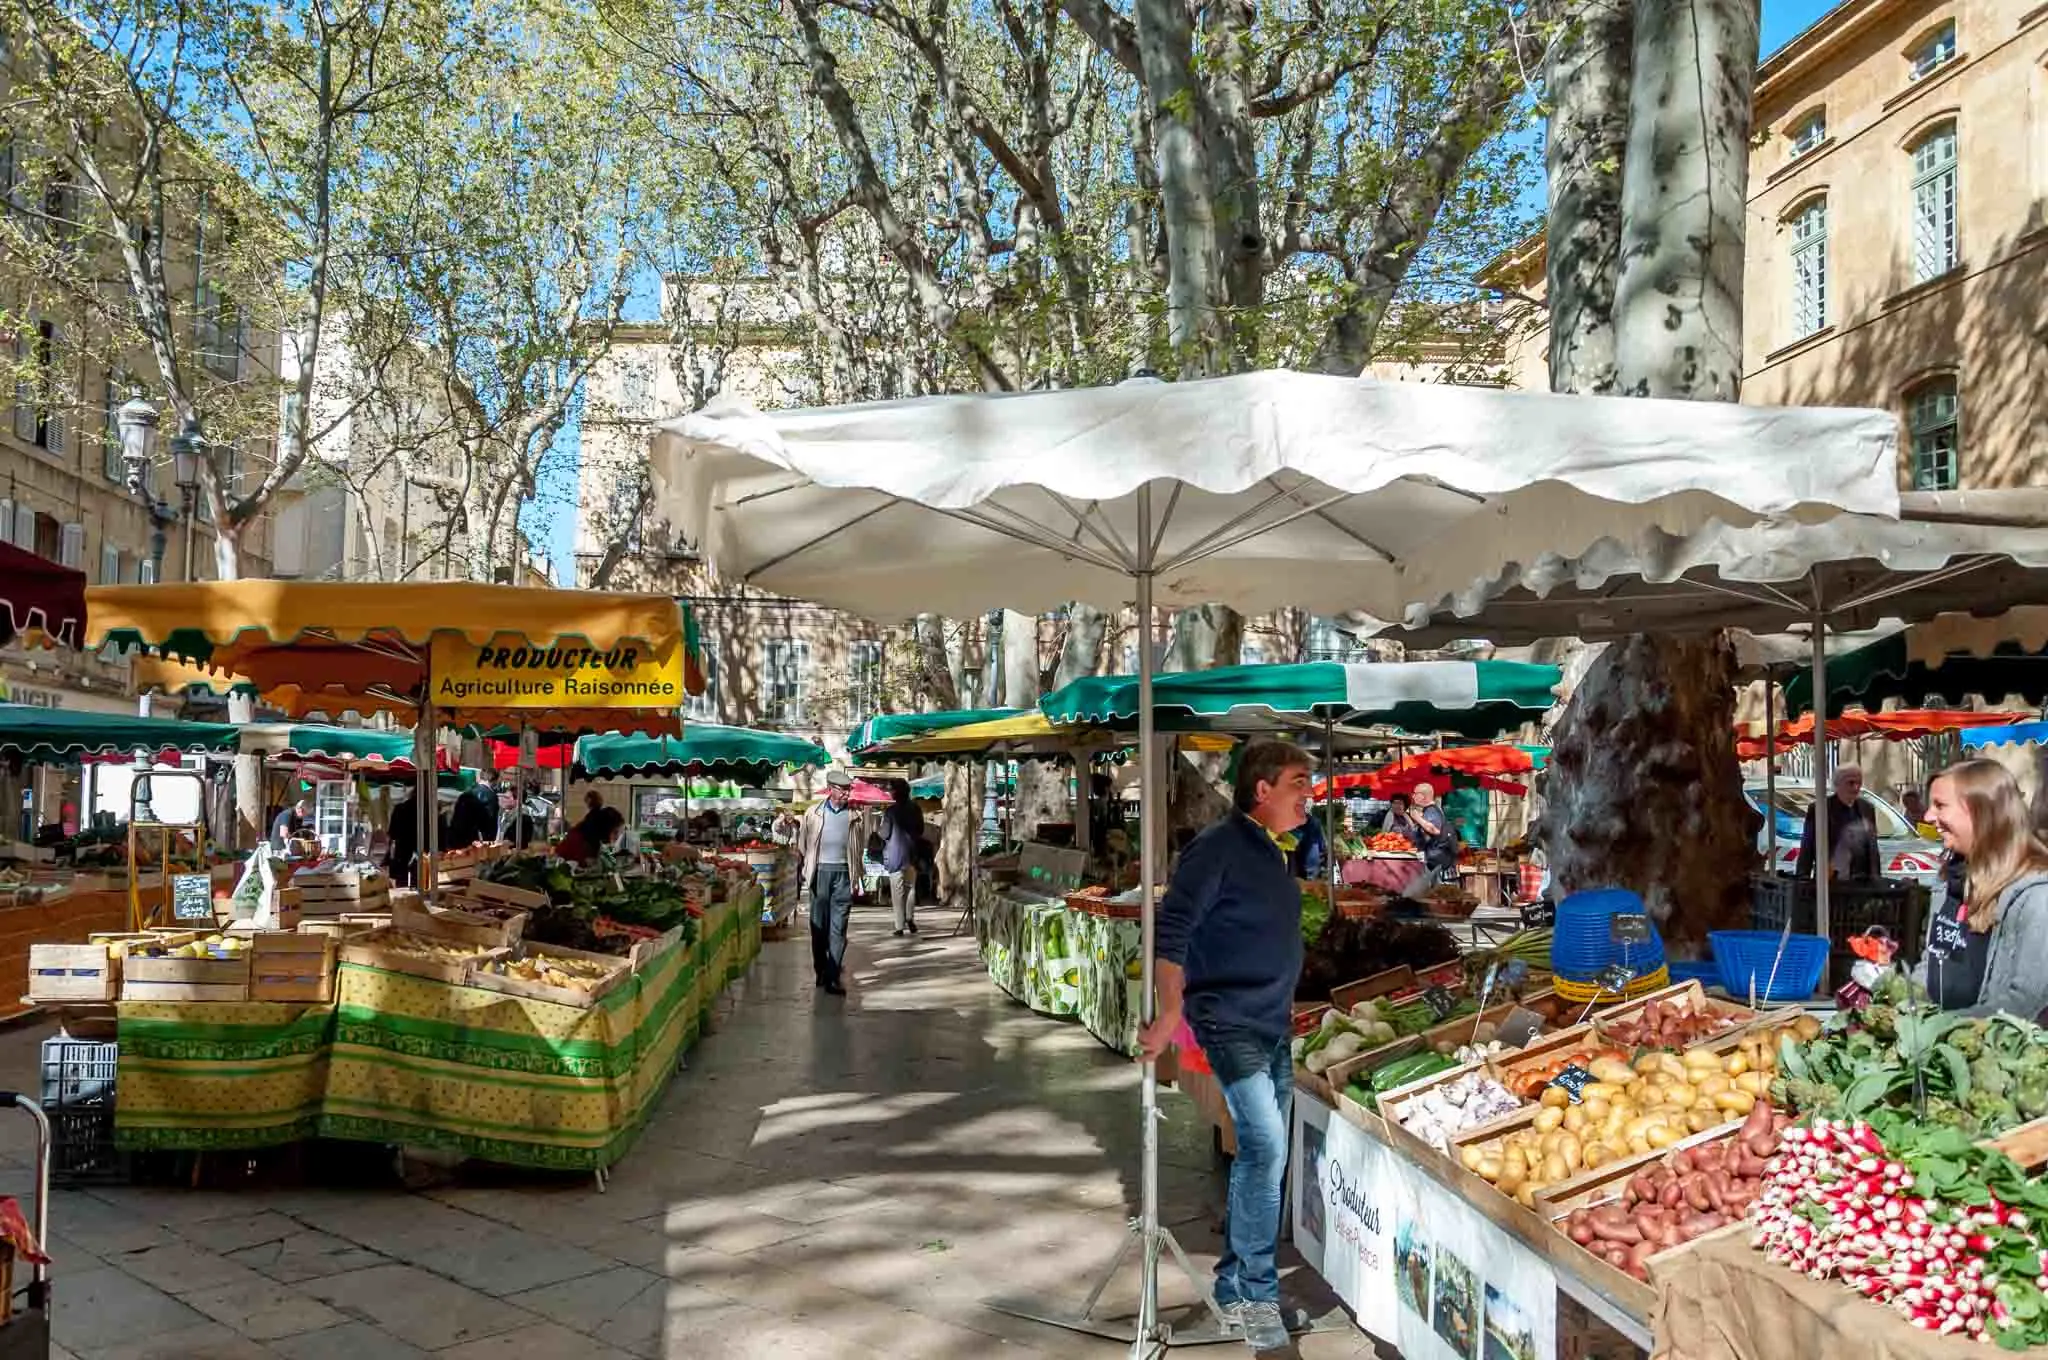 Farmer's market at Place Richelme under the plane trees in Aix-en-Provence, France.